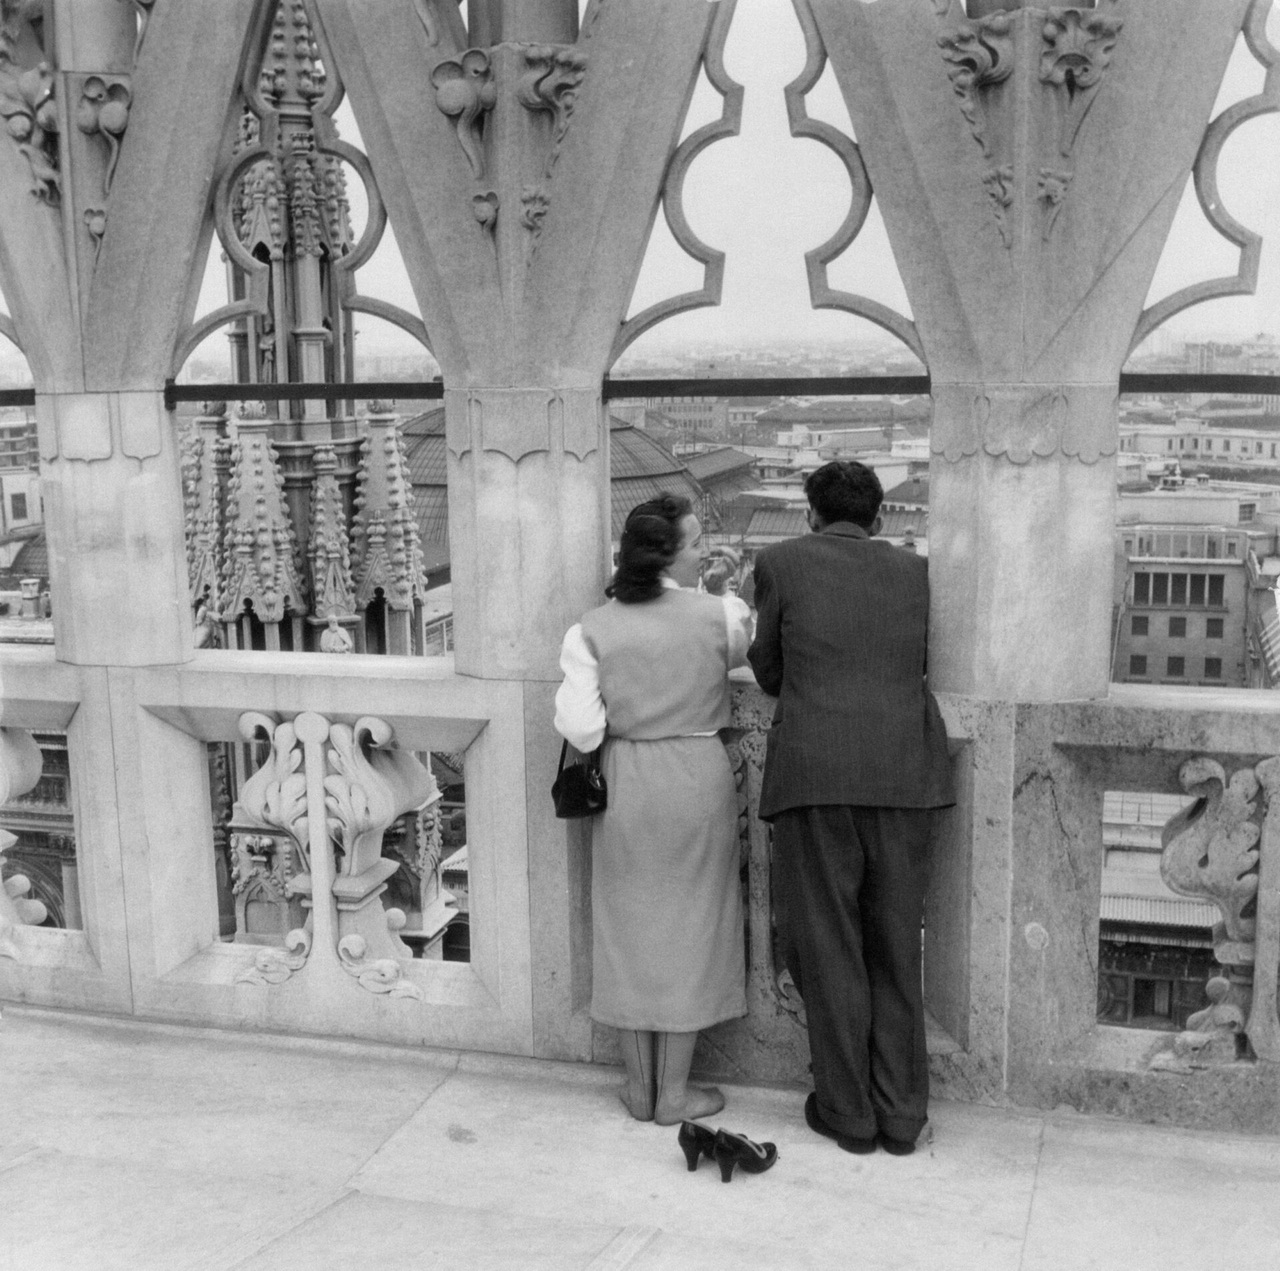 Mario De Biasi, Una coppia ammira la Galleria Vittorio Emanuele II dalle terrazze del Duomo. Credito: Mario De Biasi Per Mondadori Portfolio